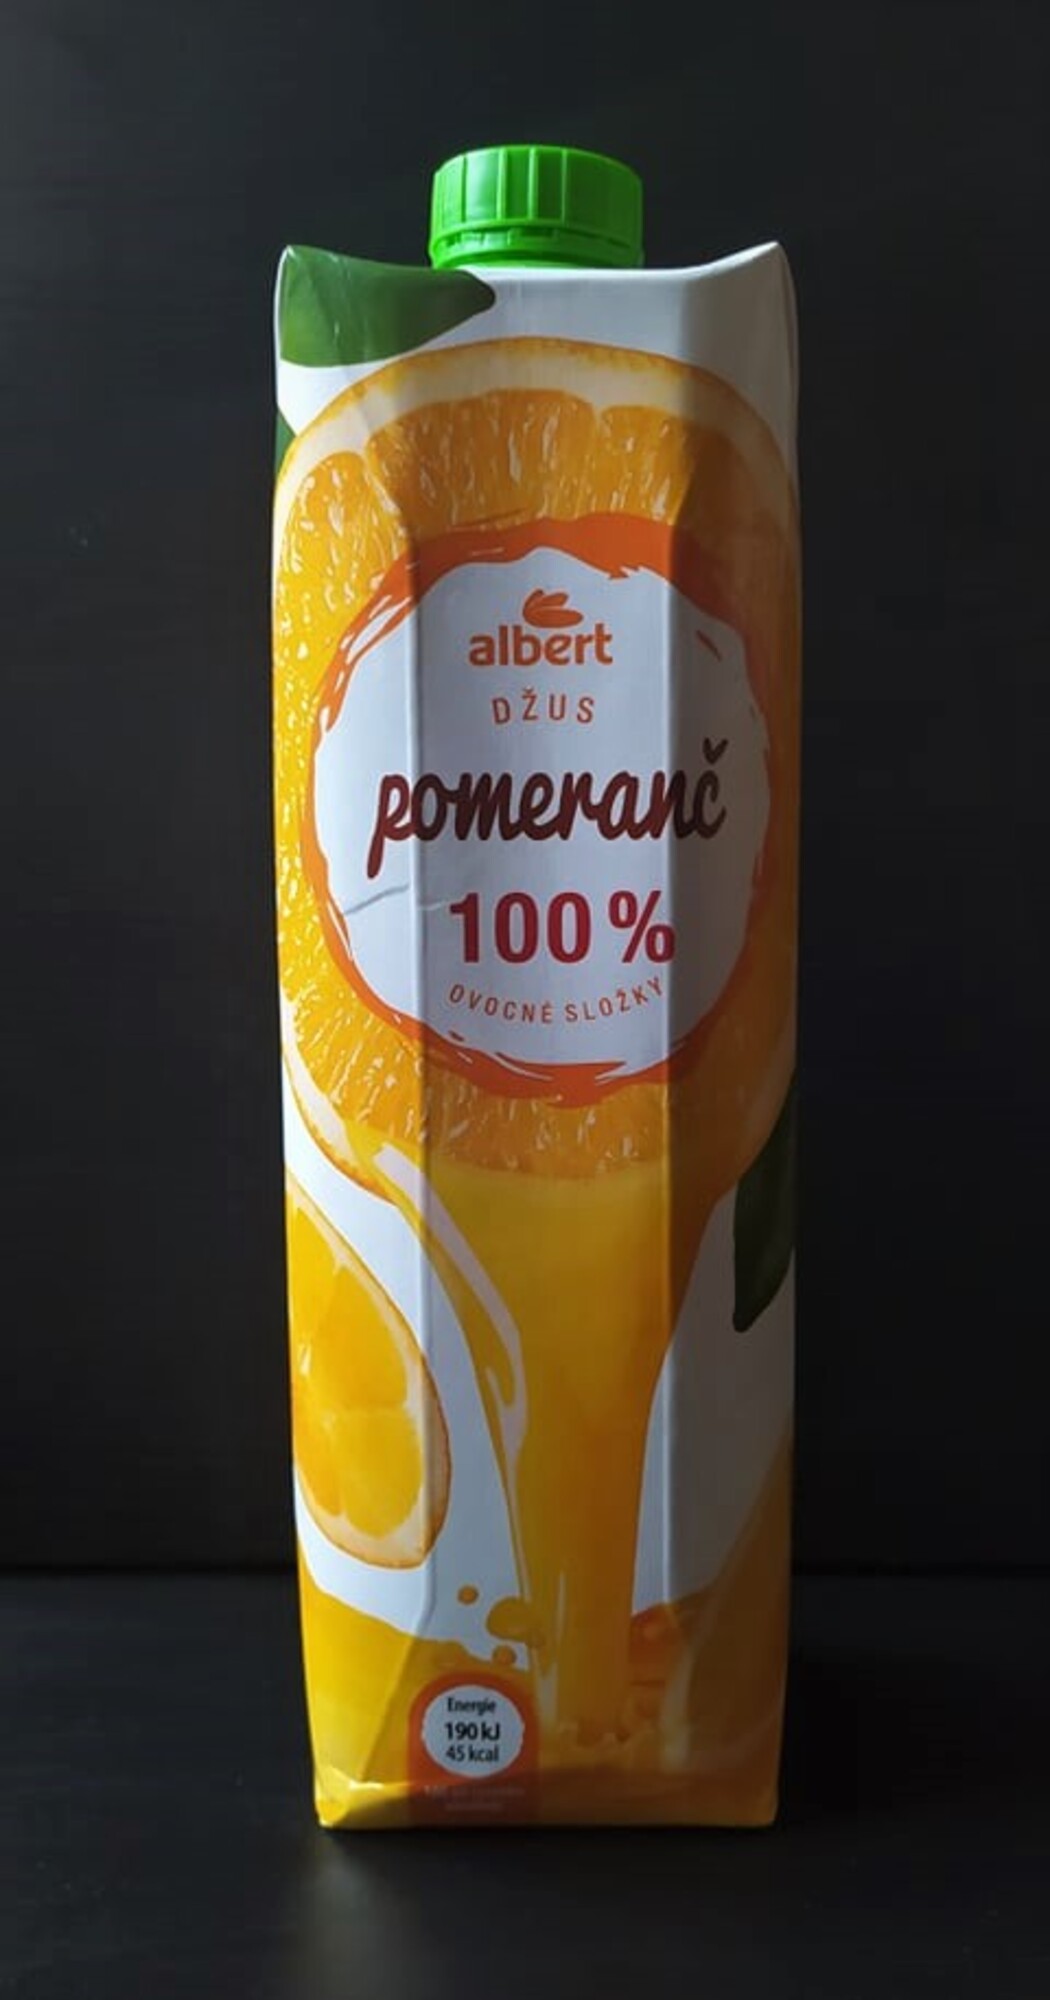 test džus pomeranč 2020 Albert